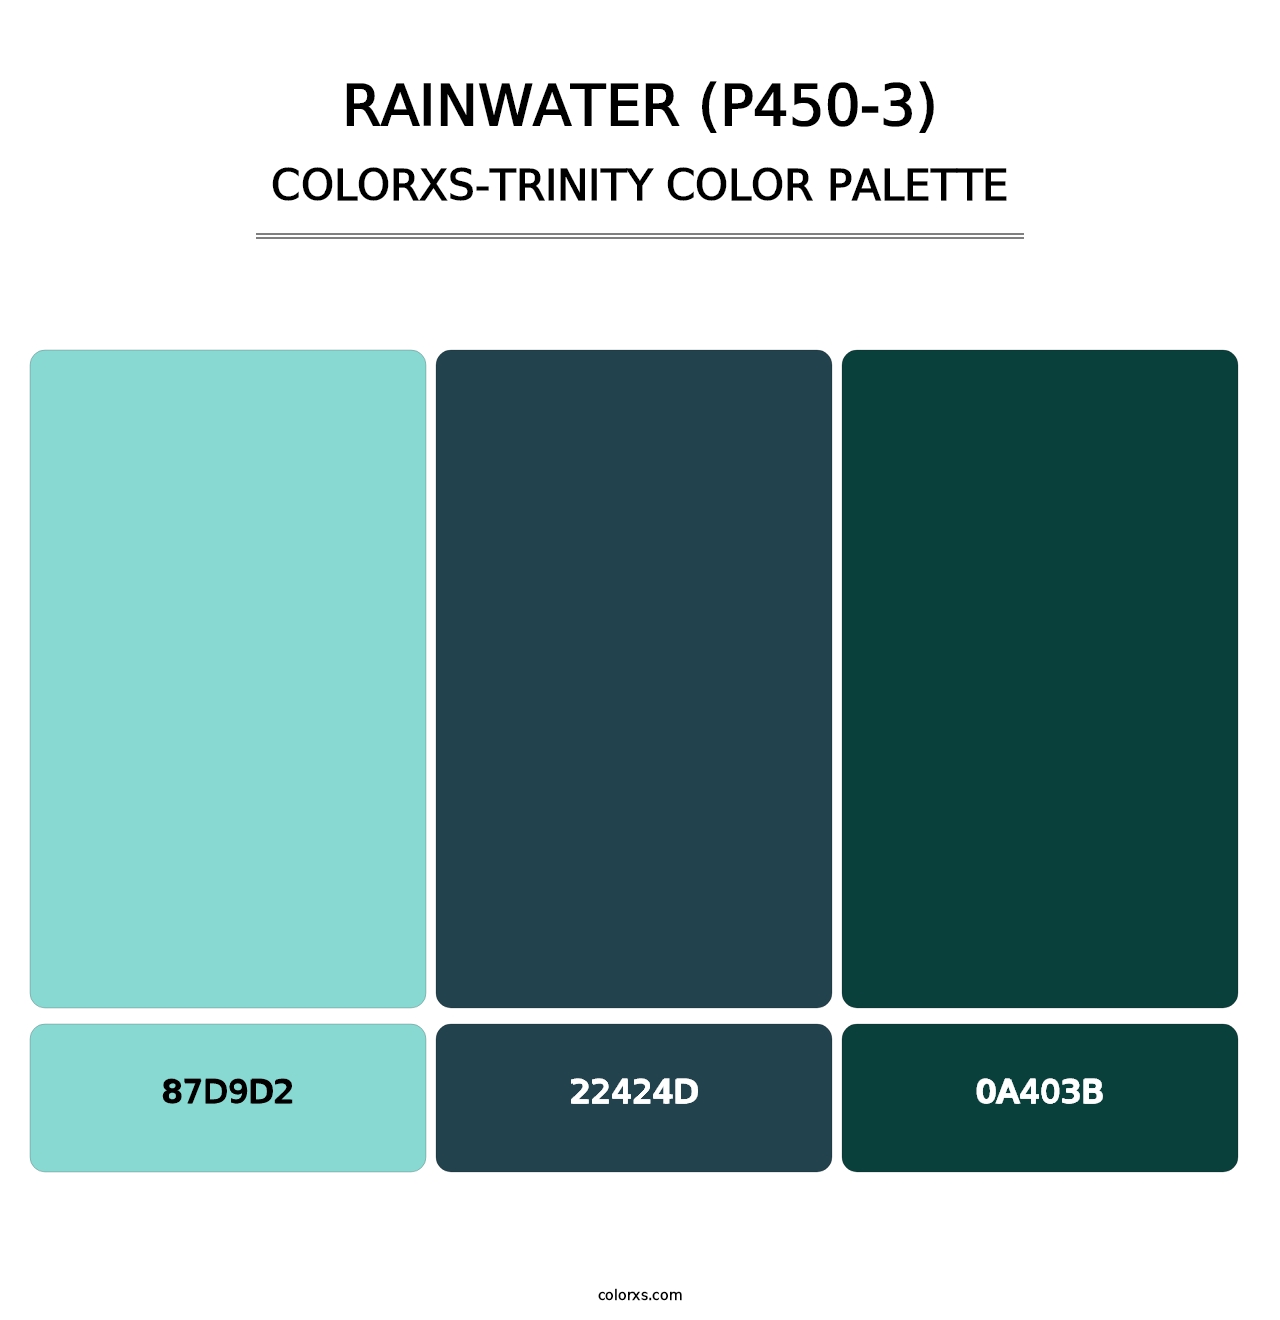 Rainwater (P450-3) - Colorxs Trinity Palette